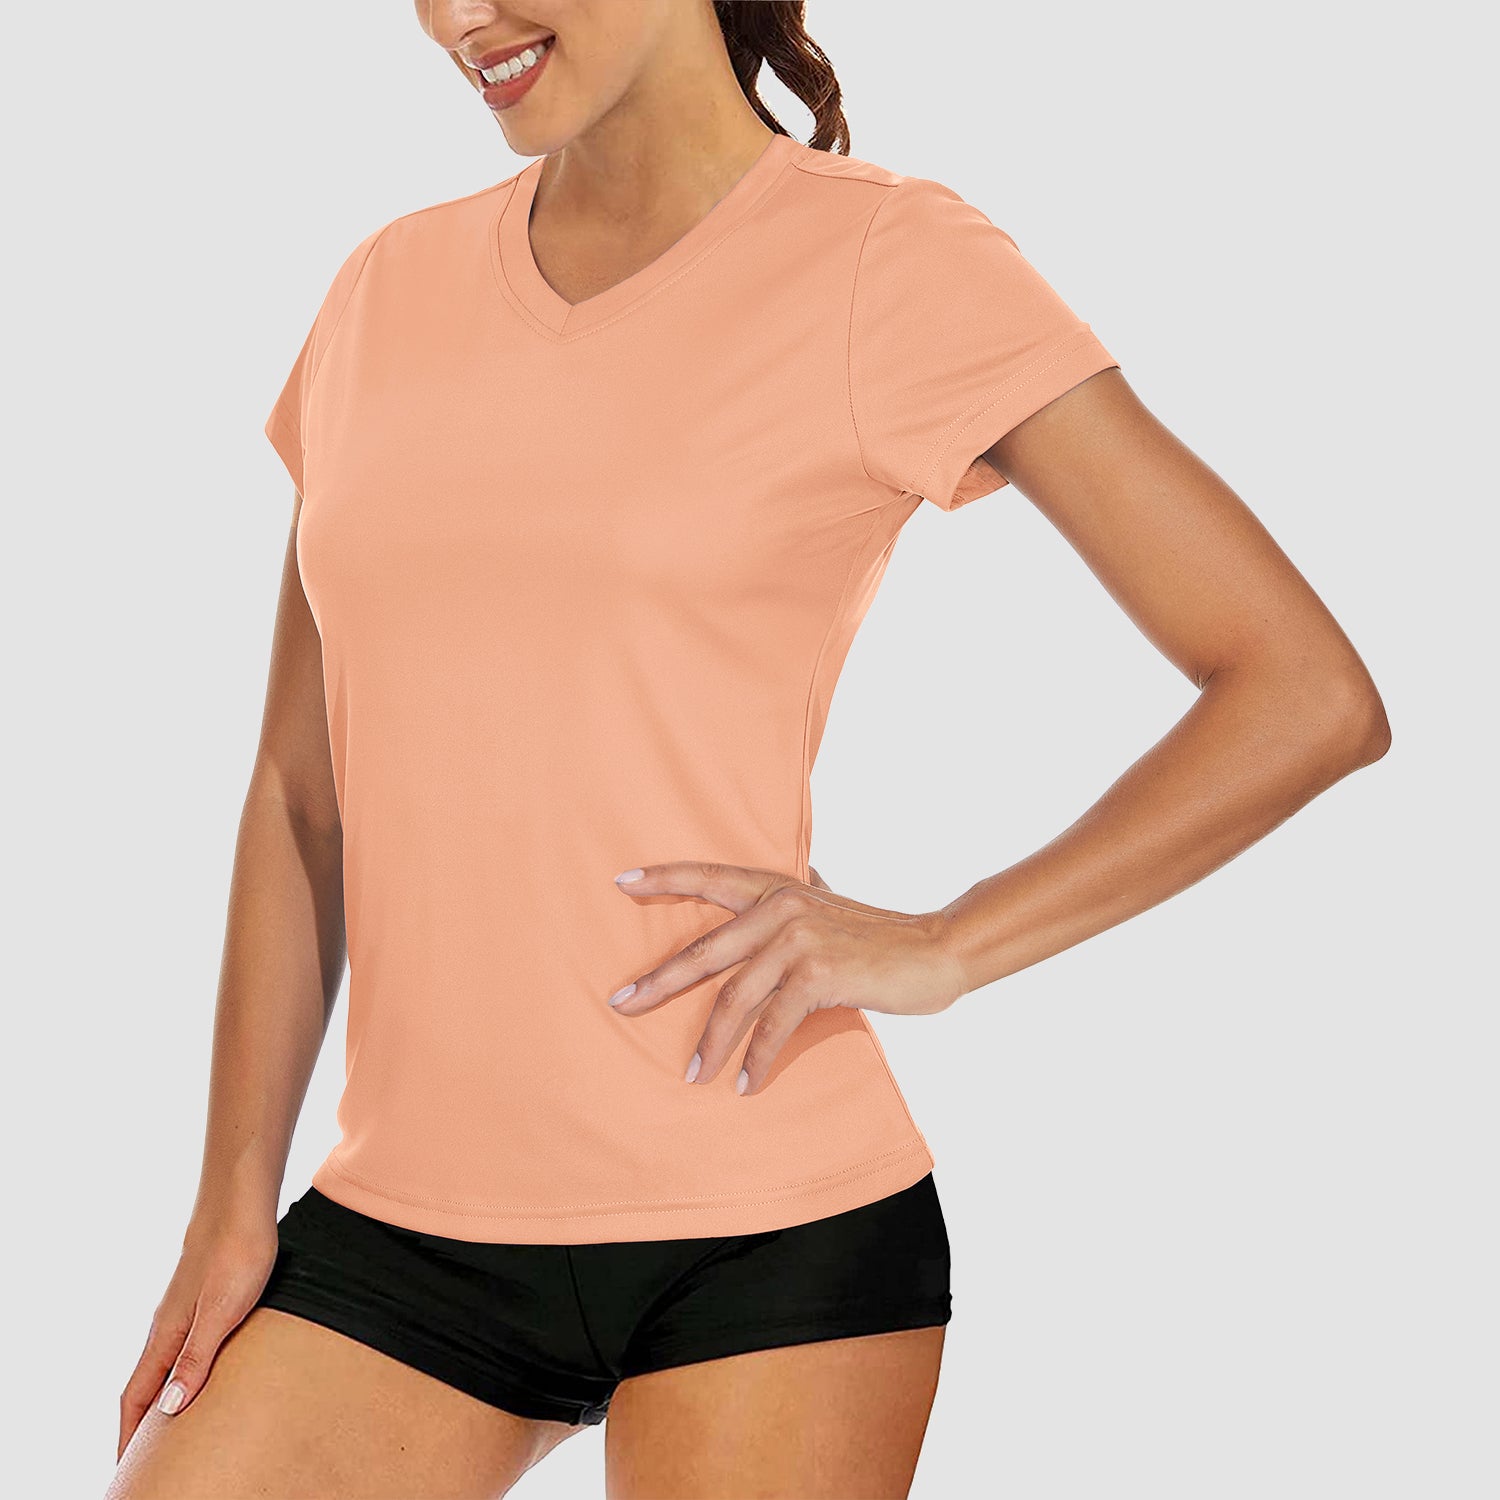 Women's T-Shirts Short Sleeve Quick Dry Athletic V-Neck Tee Shirt Running